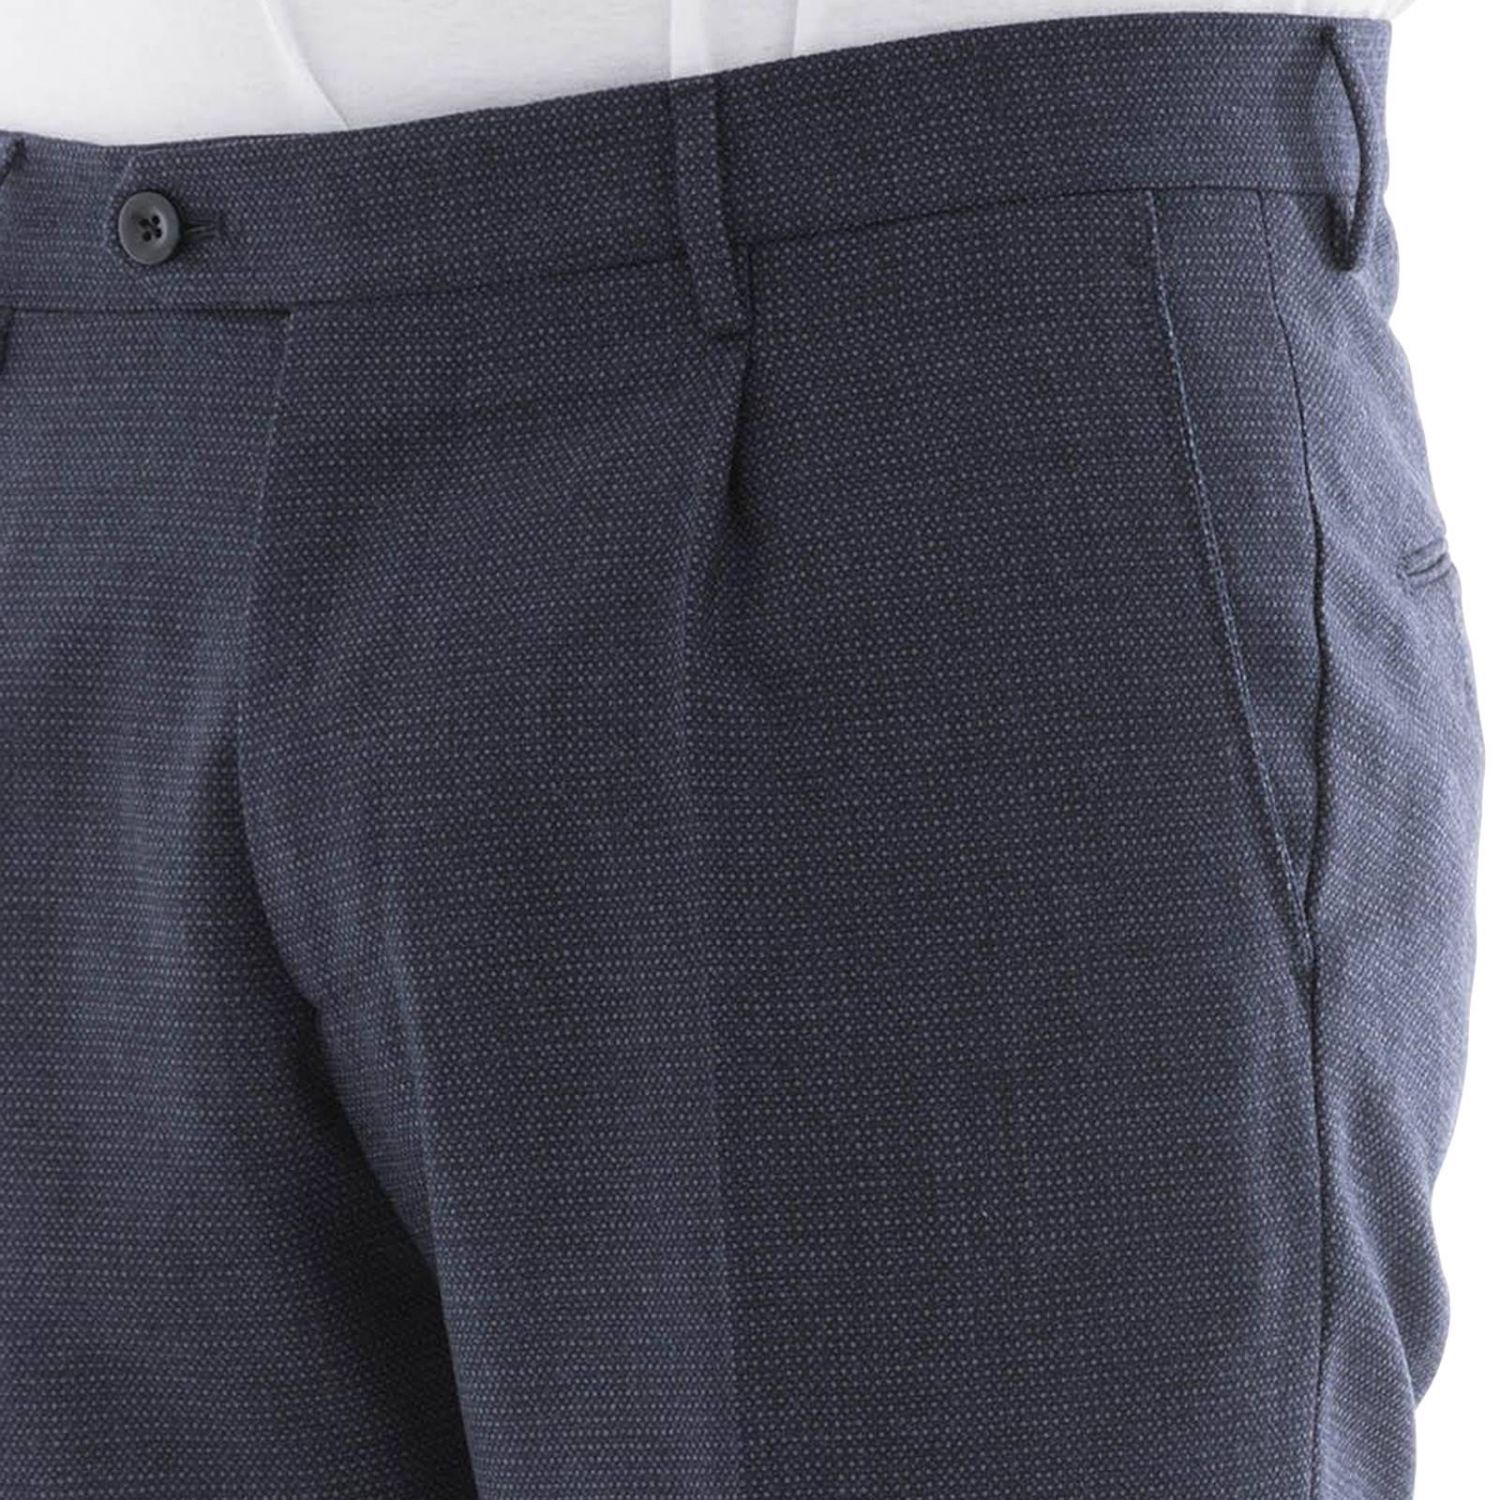 Berwick Outlet: Pants men | Pants Berwick Men Blue | Pants Berwick ...